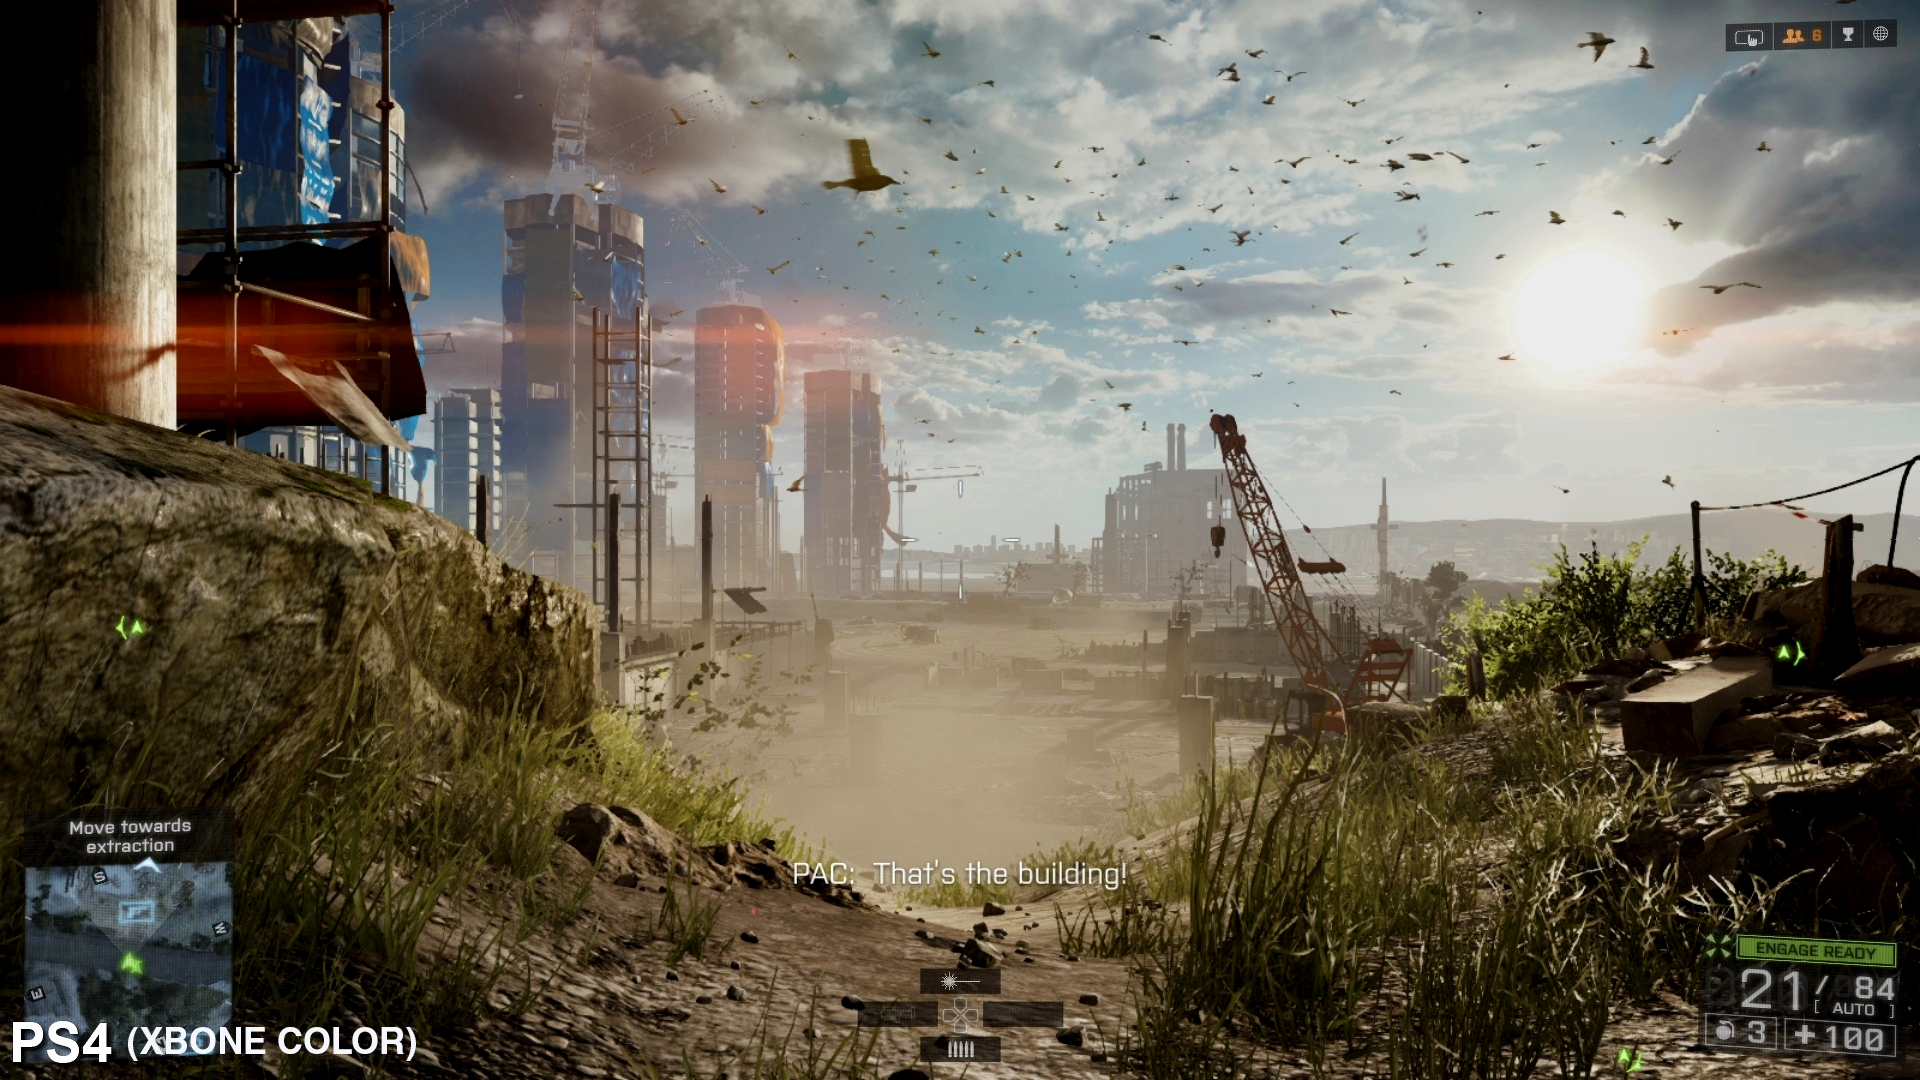 Battlefield 4 Grafikvergleich zeigt Qualitätsunterschiede bei Texturen